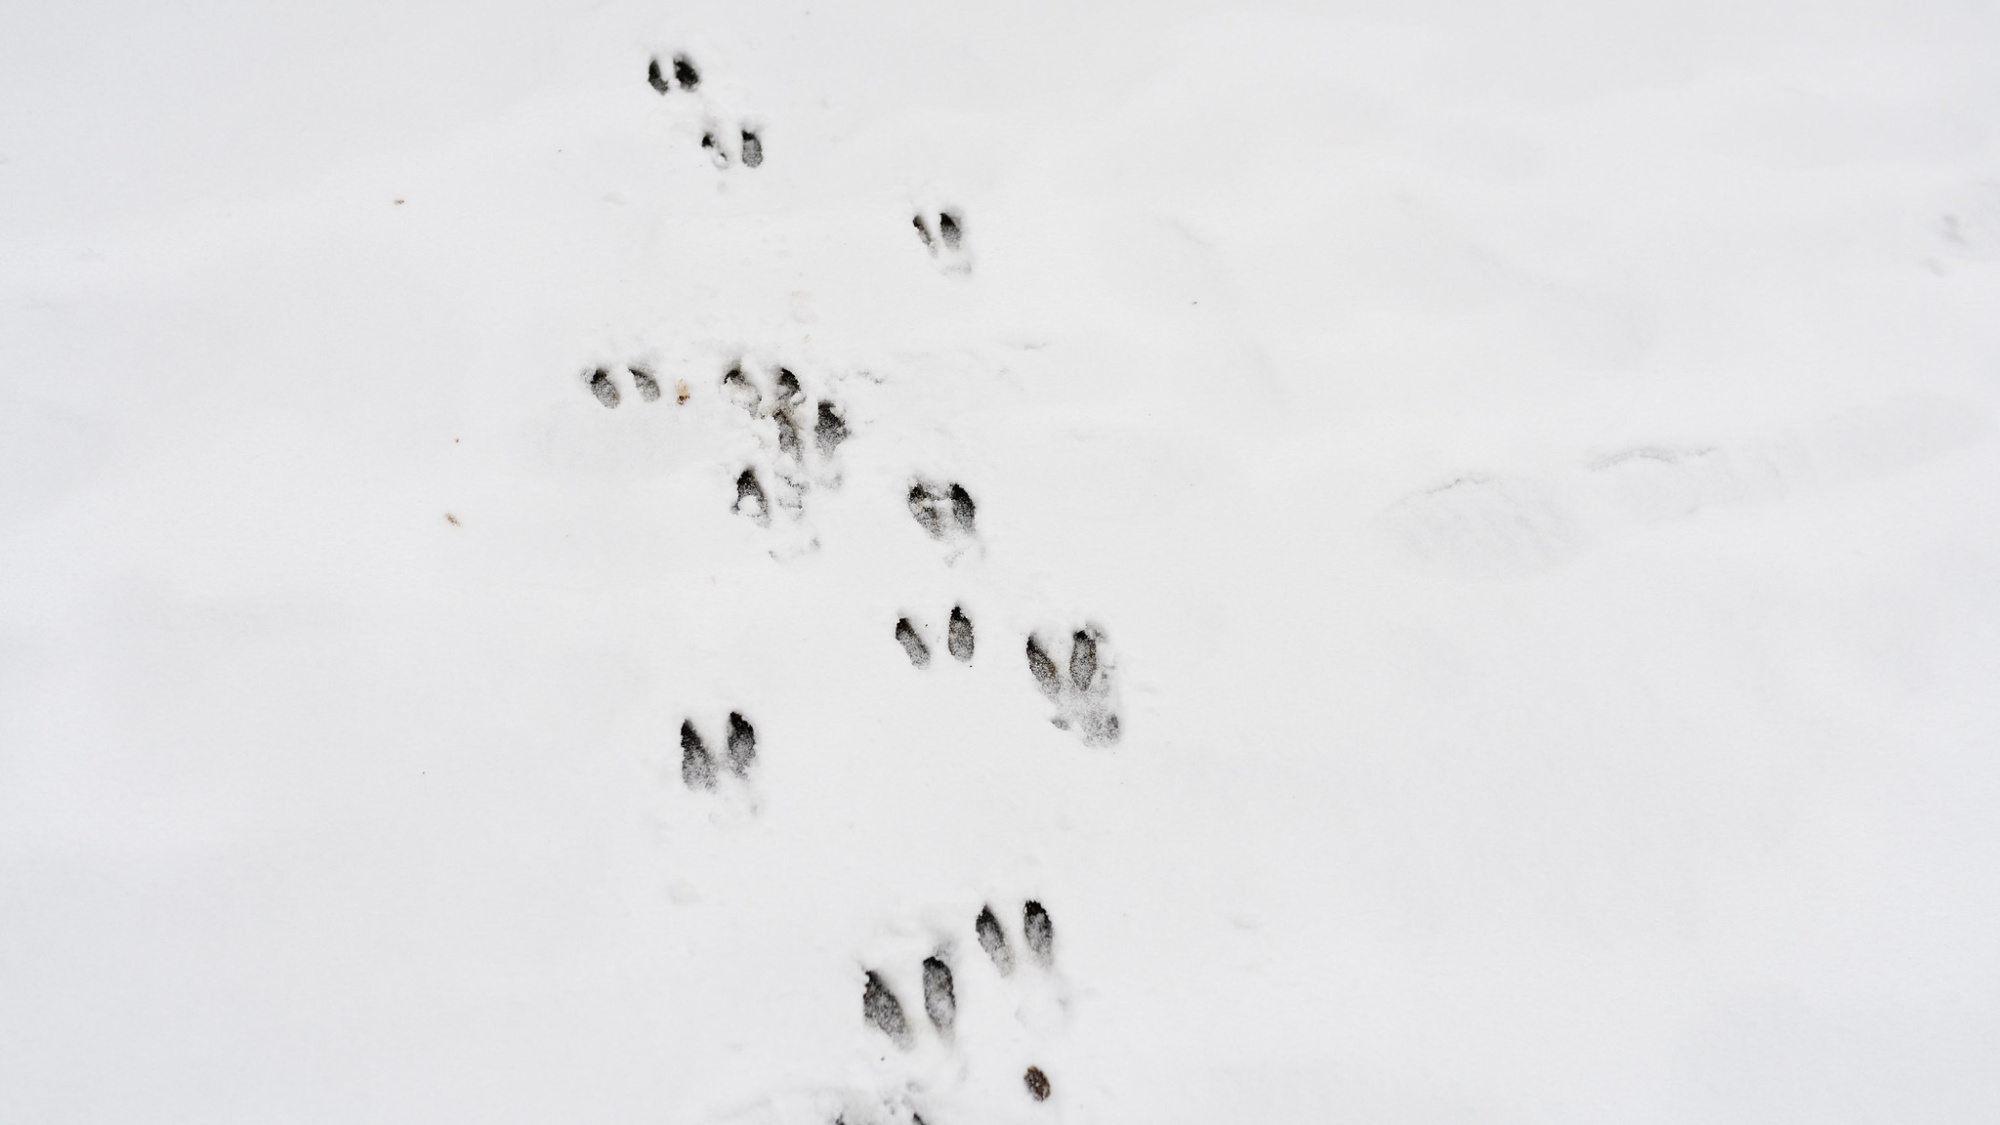 Deer tracks walk through snow.